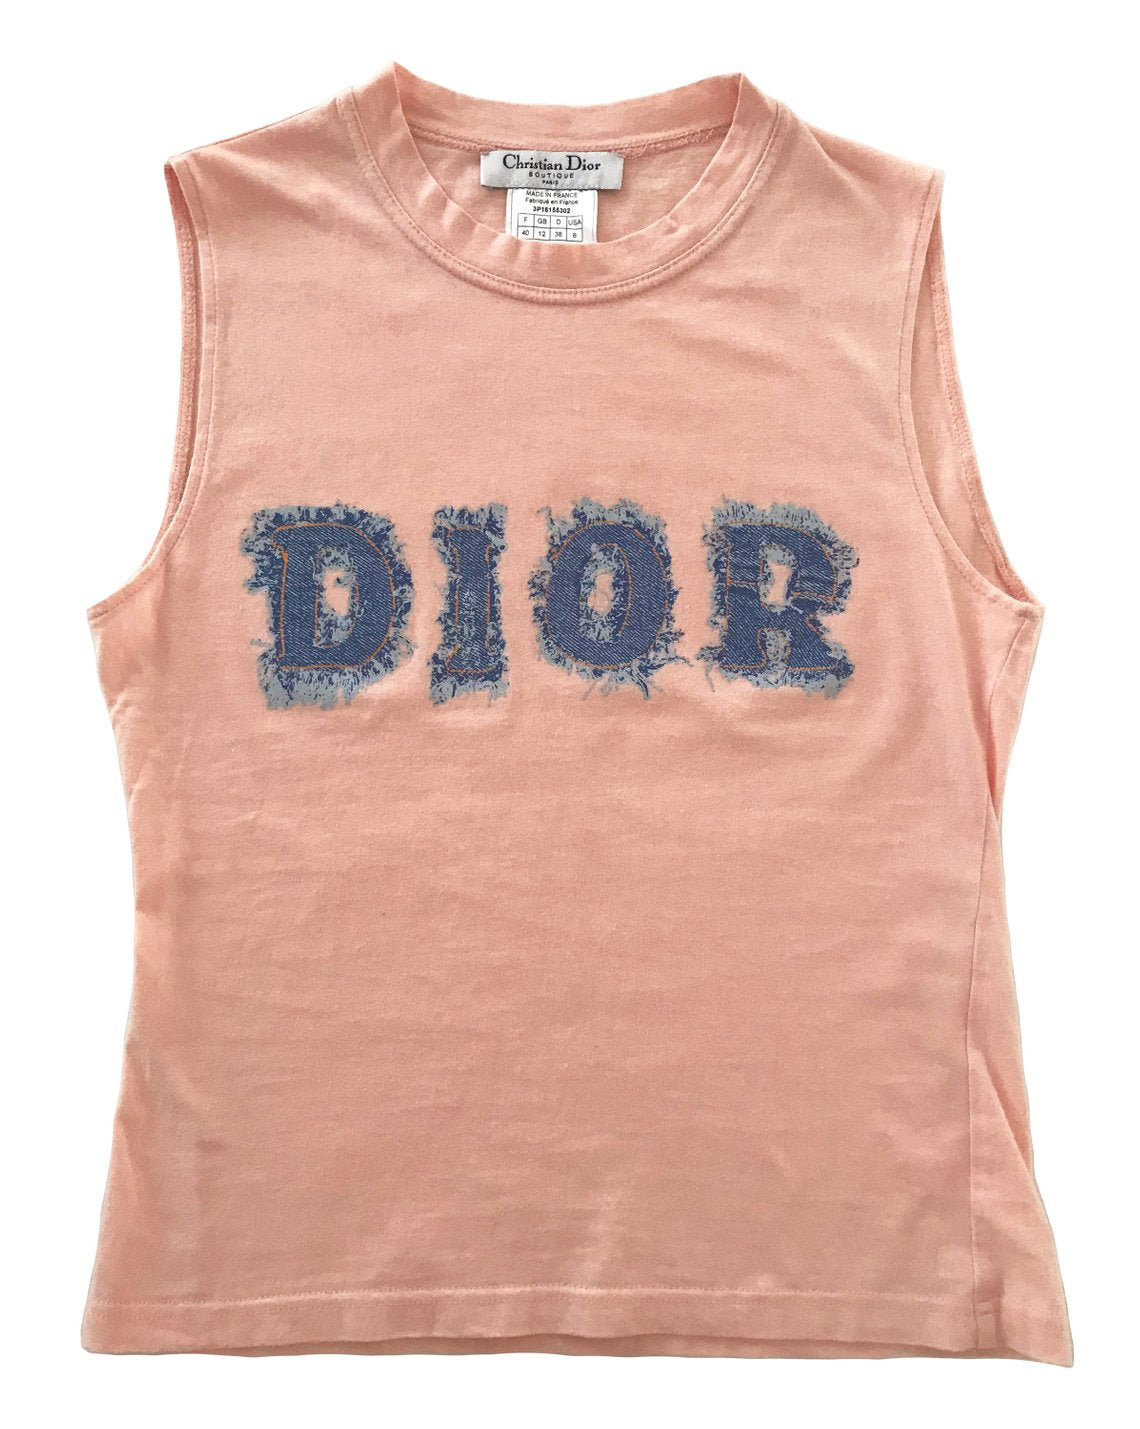 Vintage Christian Dior Tank  Crop top designs, Christian dior